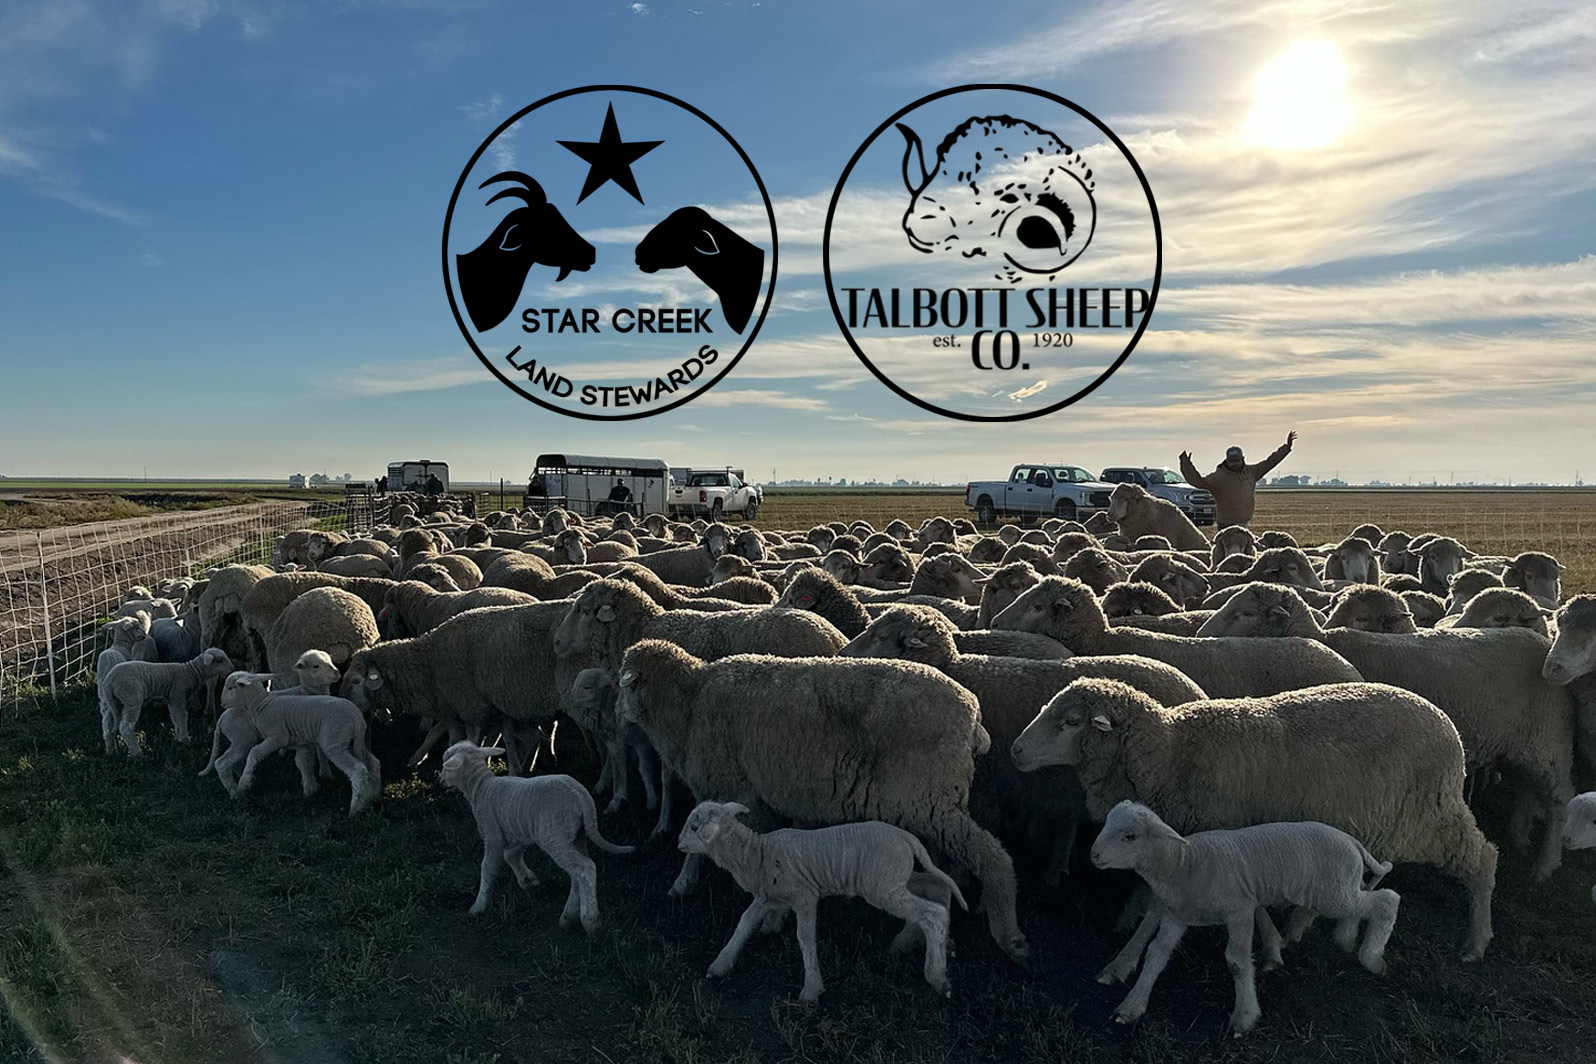 Star Creek and Talbott Sheep logos, sheep in a field